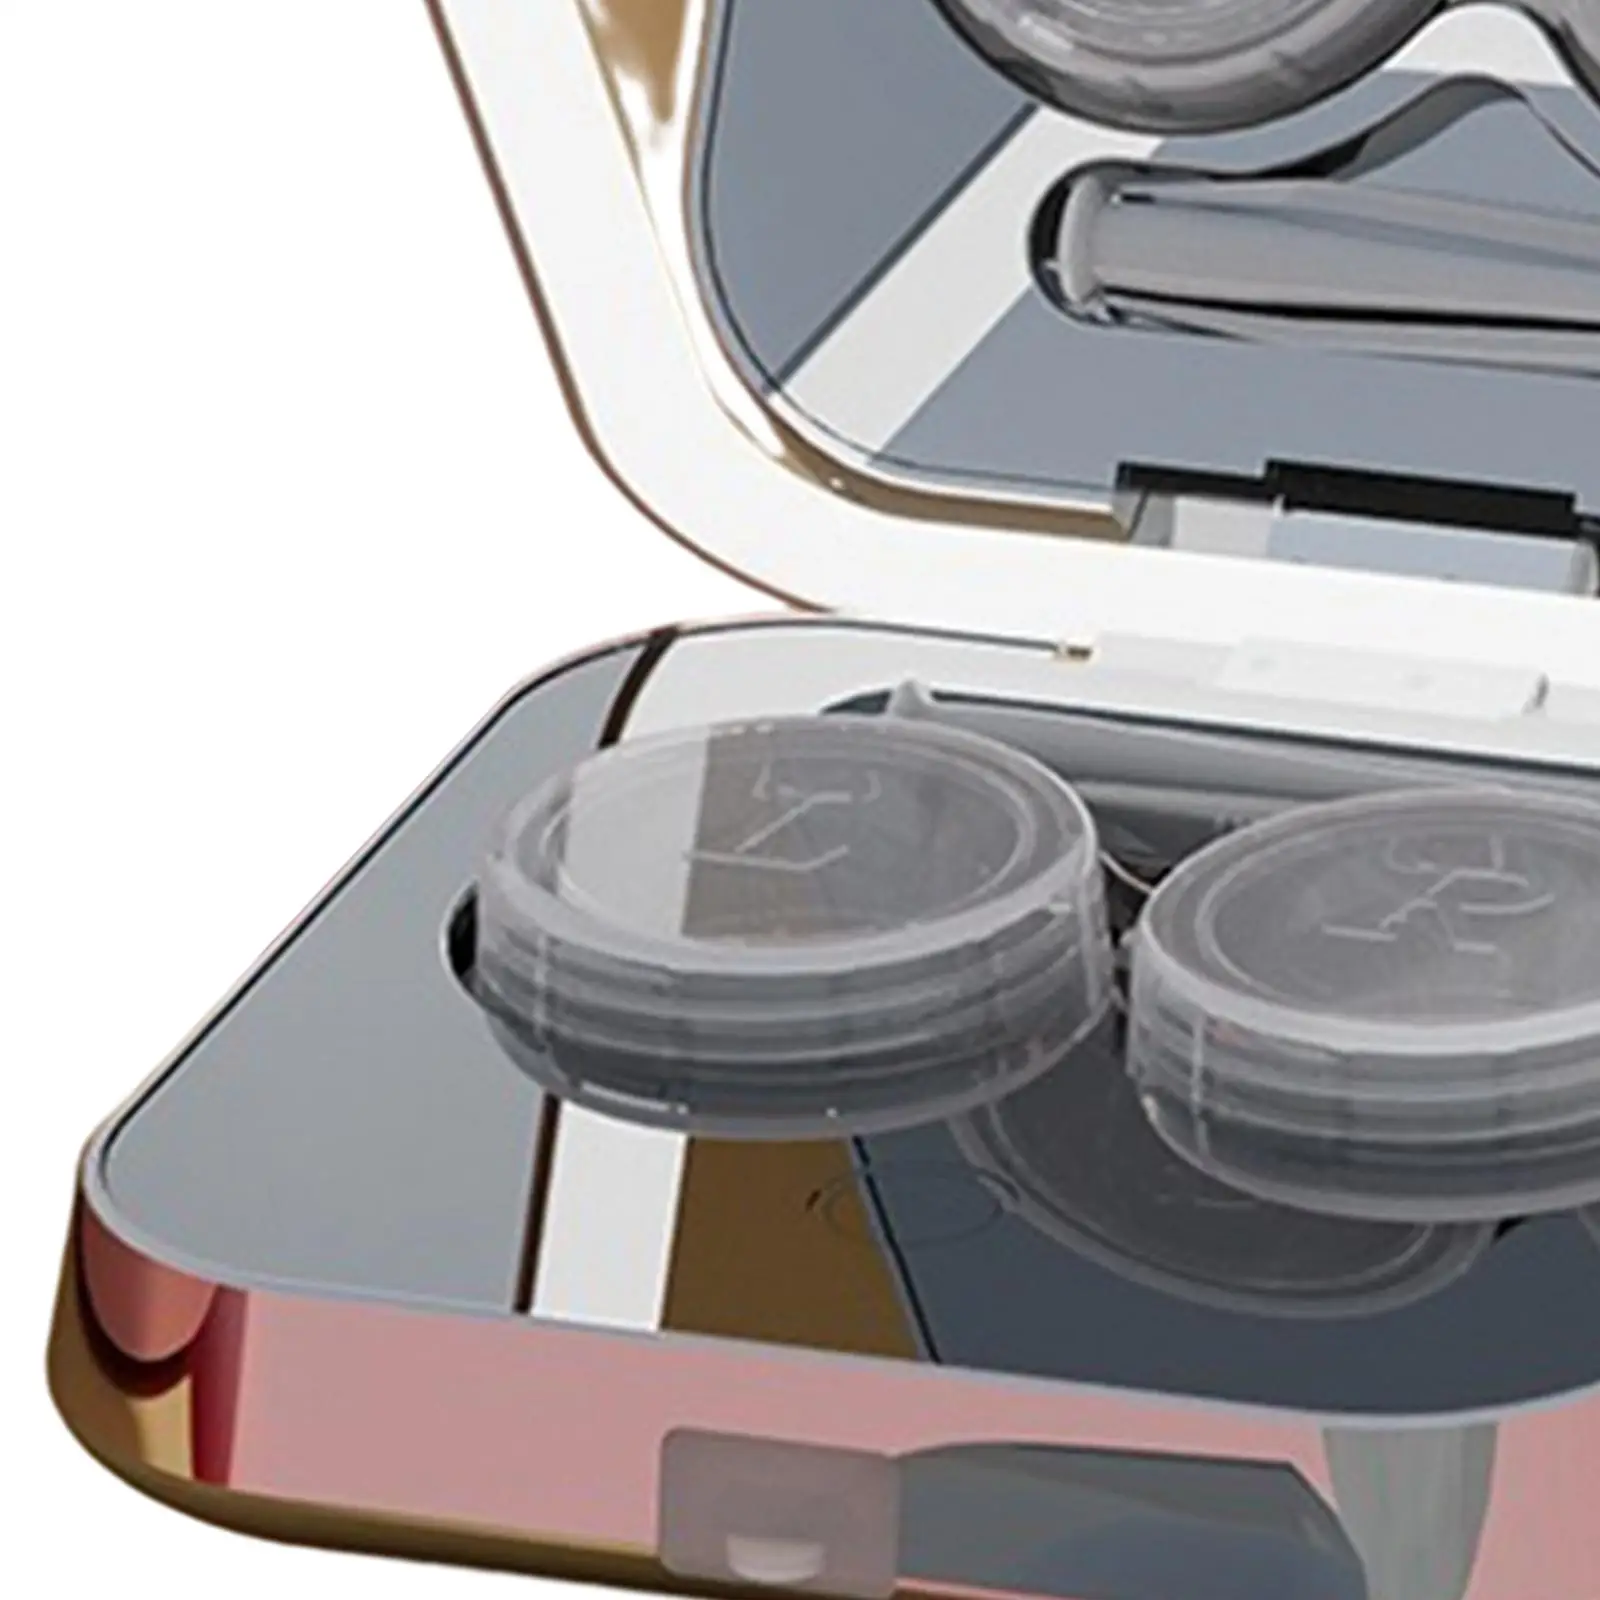 Contact Lens Ultrasonic Storage with Mirror Tweezers Leakproof Rechargeable Contact Lens Case Cleaner Women